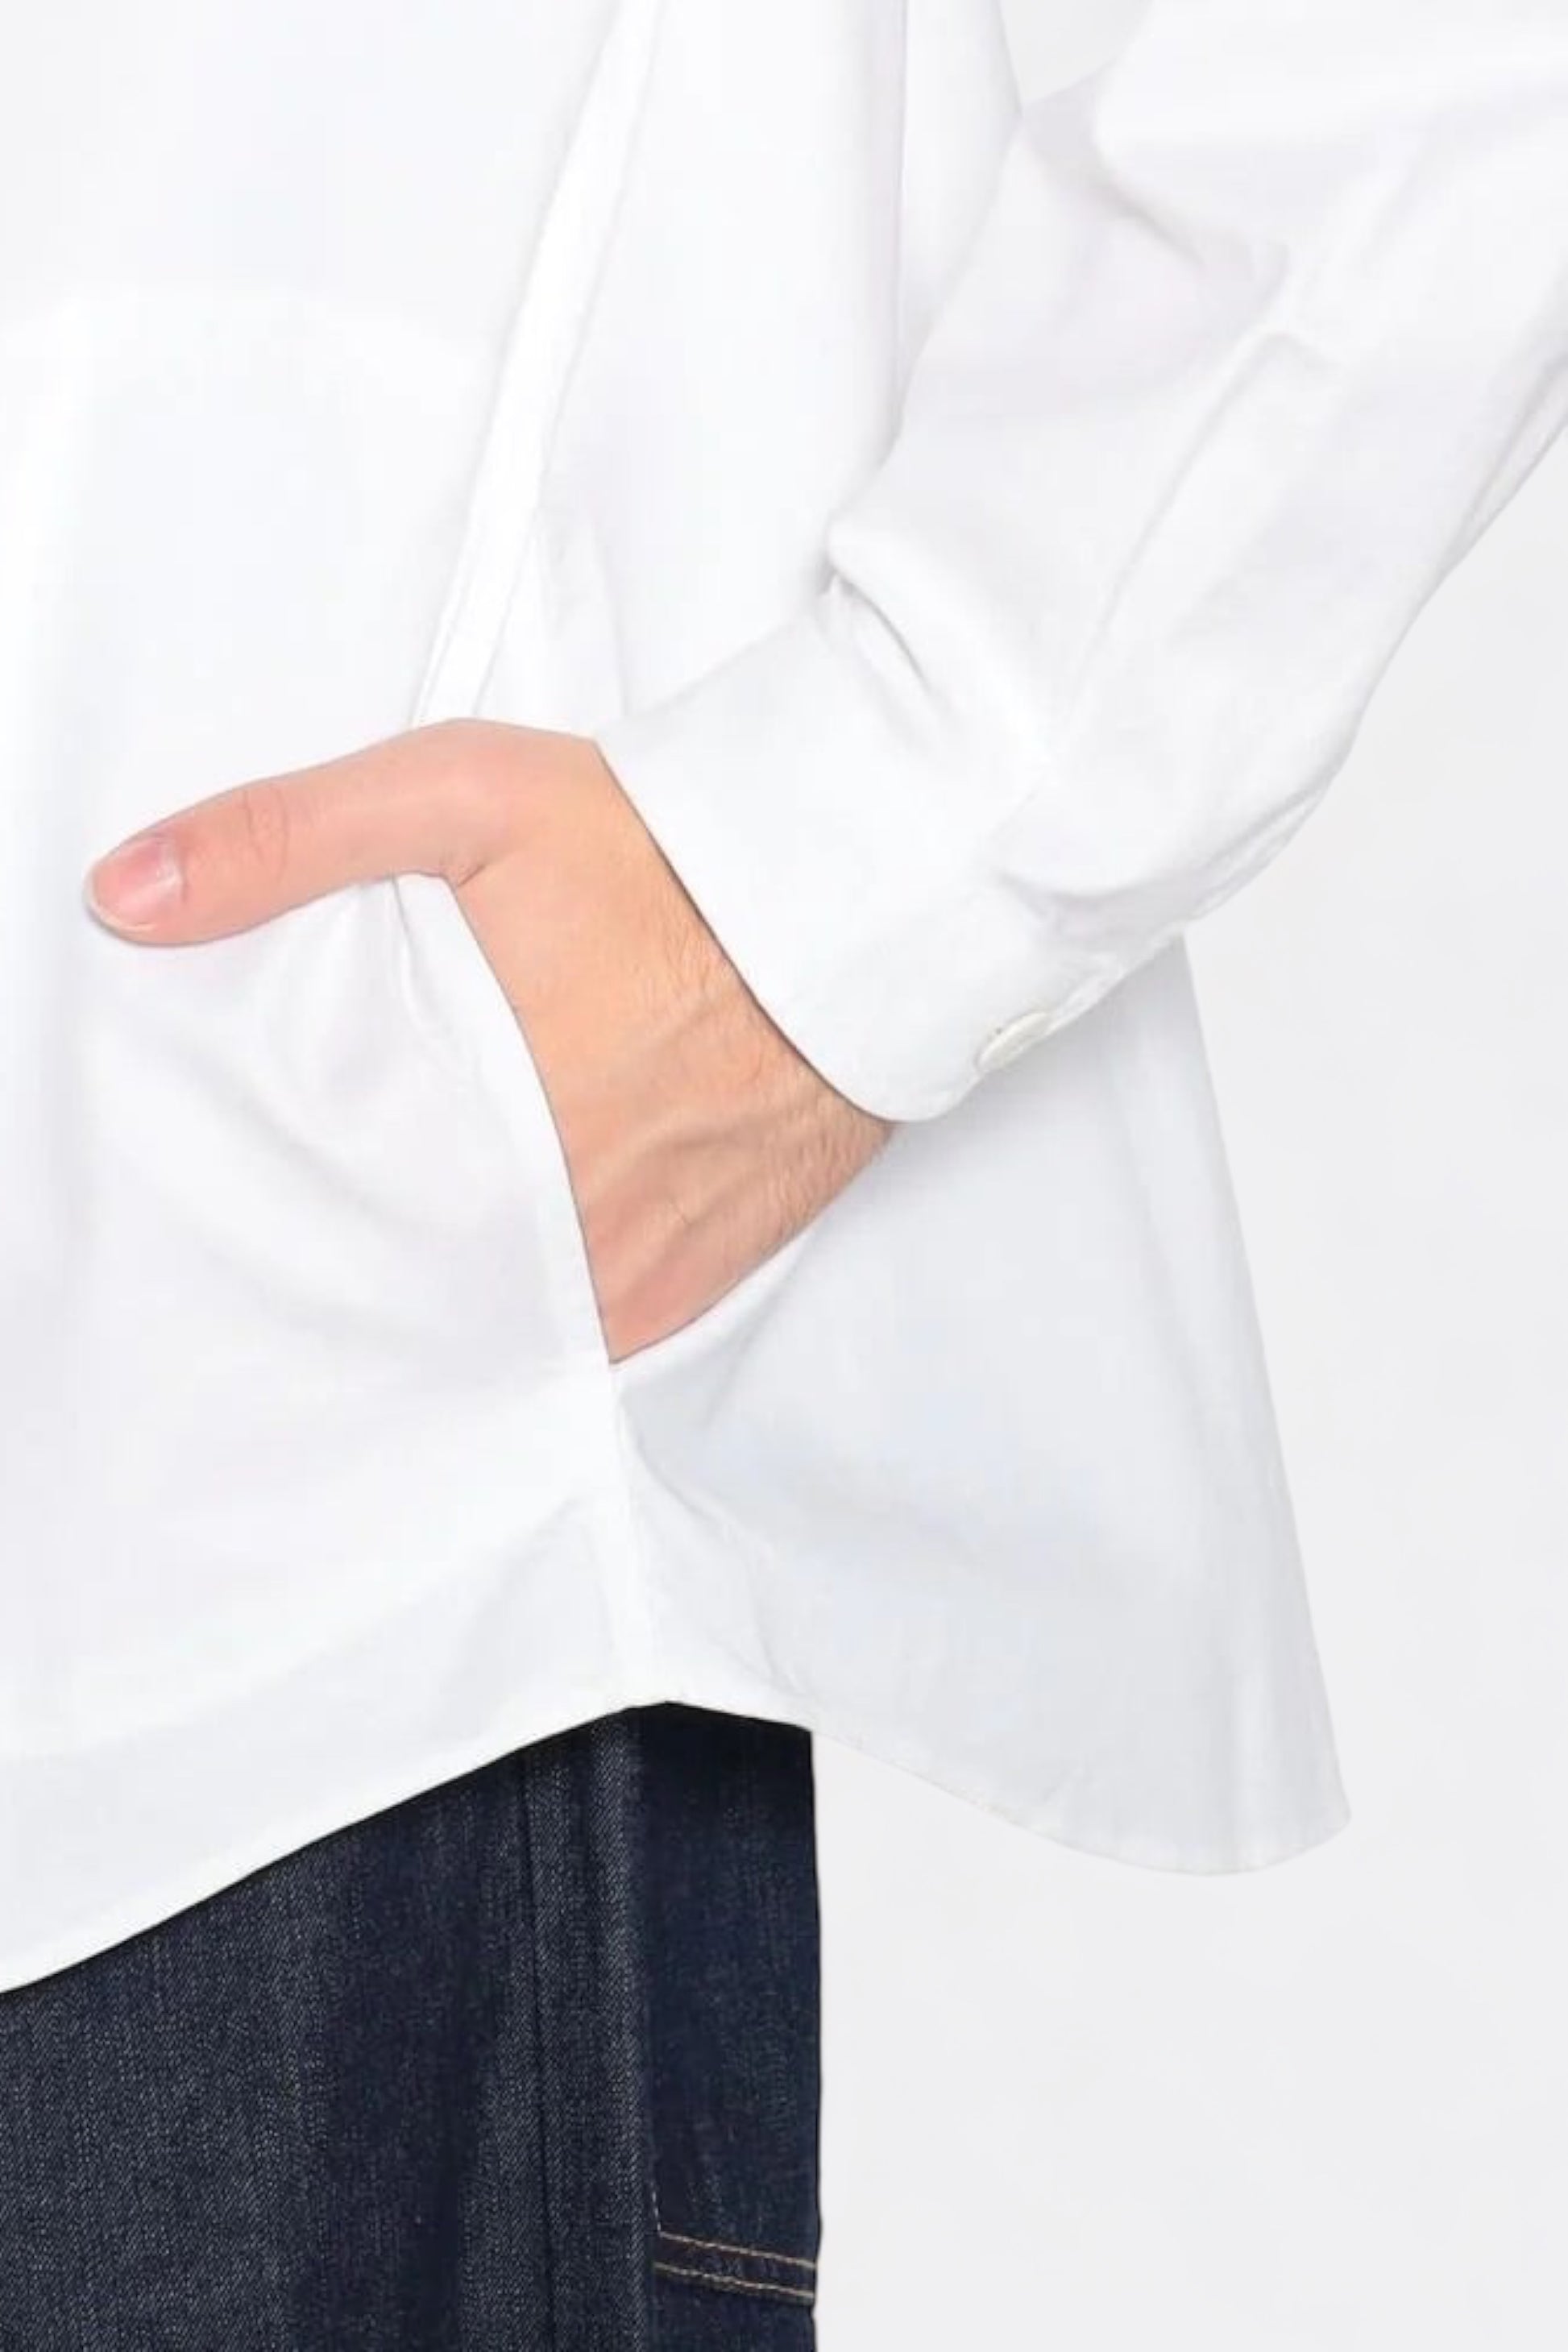 Danton - Oxford Round Collar Pullover Shirt  Plain (White)